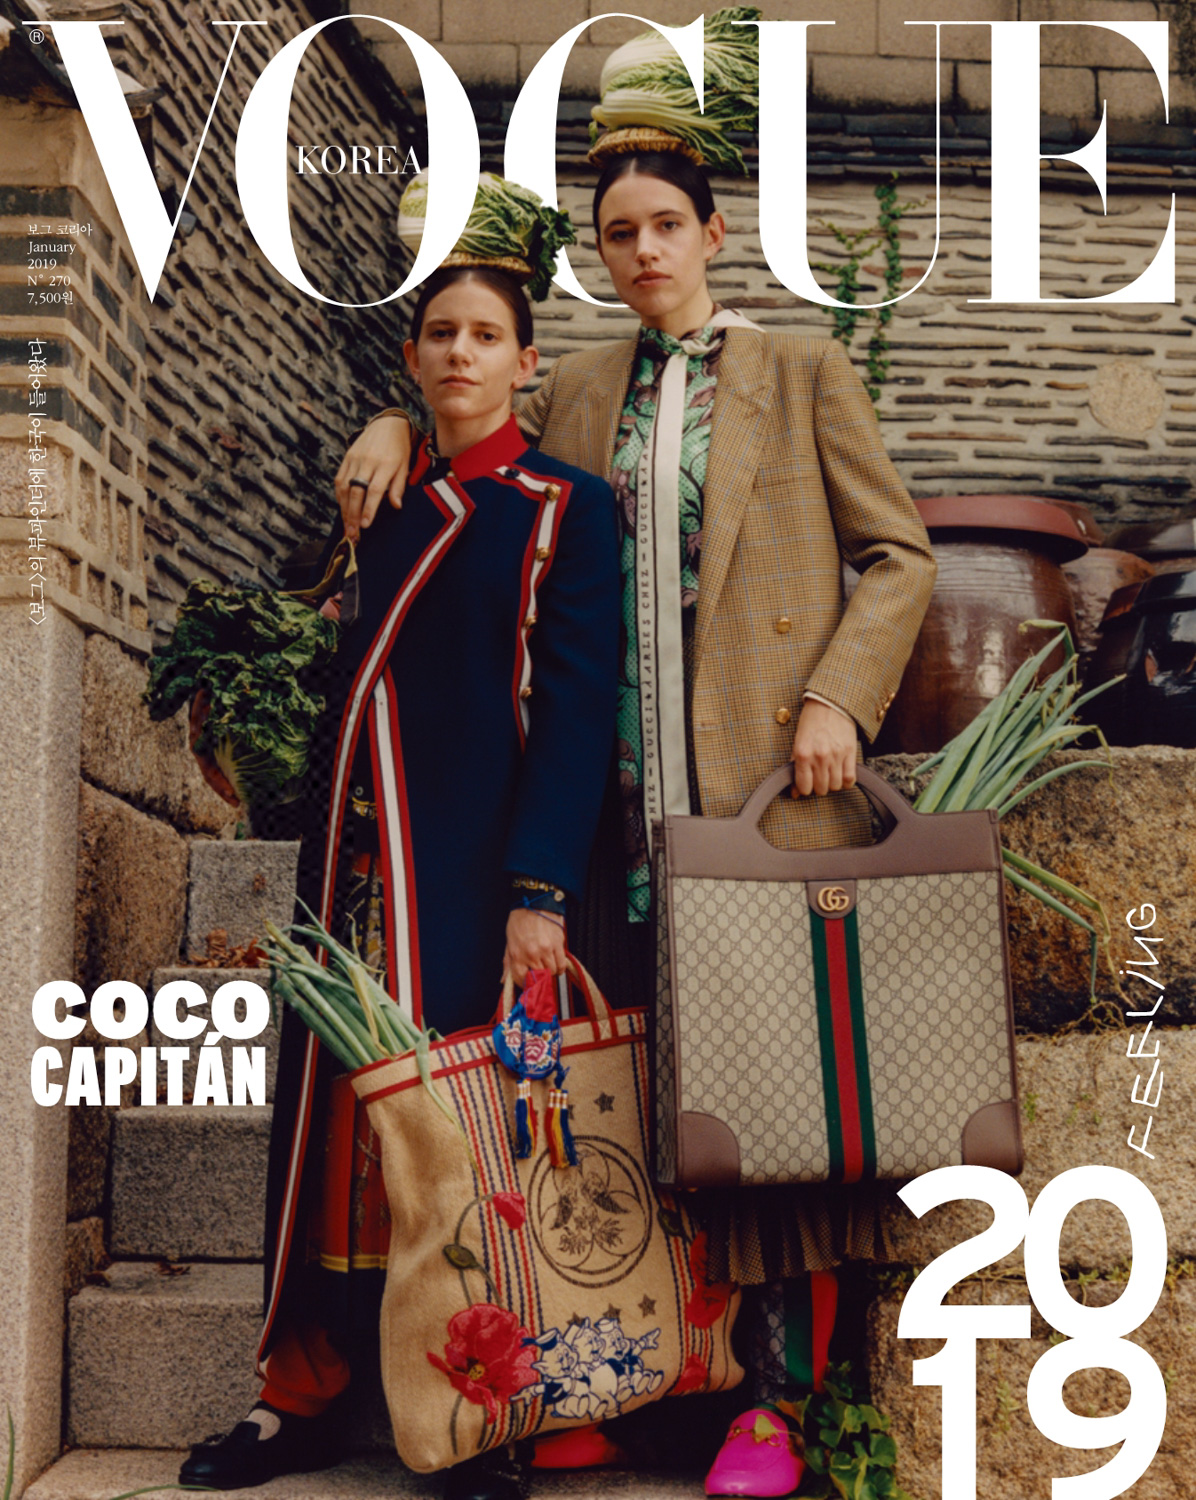 Vogue Korea: The New Year → Coco Capitán